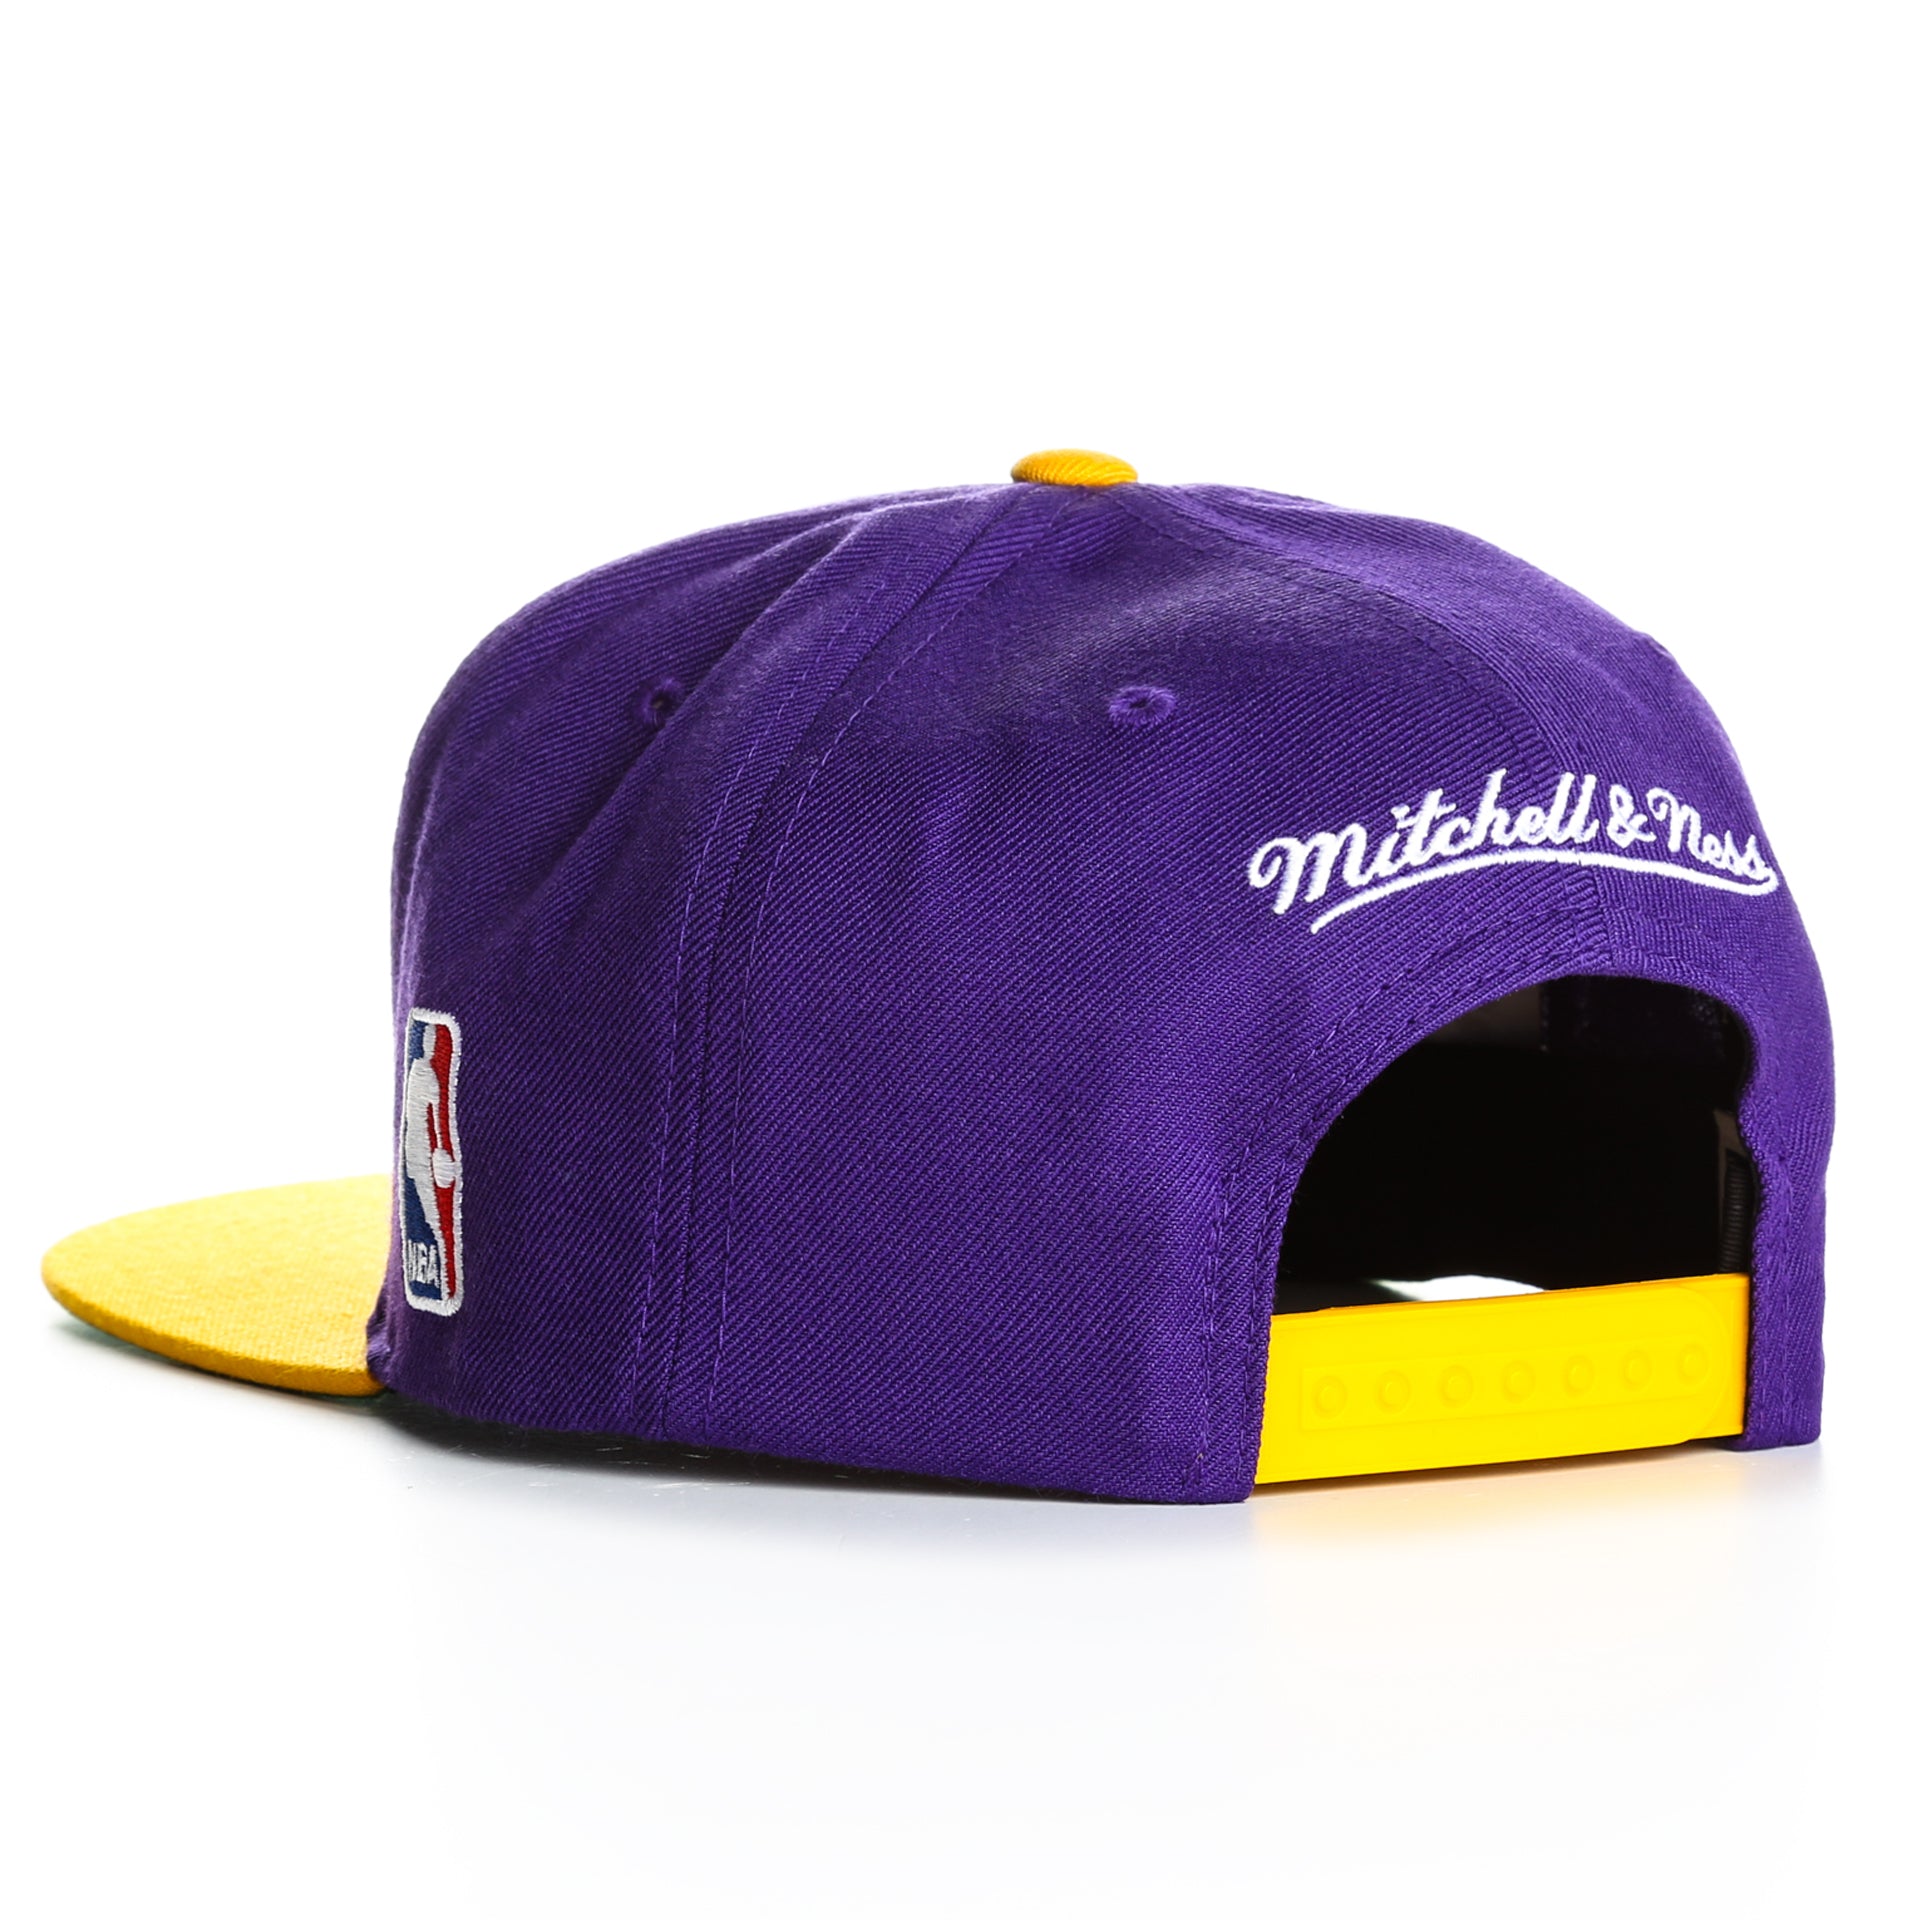 Mitchell & Ness Los Angeles Lakers Snapback Hat for Men - Black/Yellow/Purple - La Lakers Cap for Men